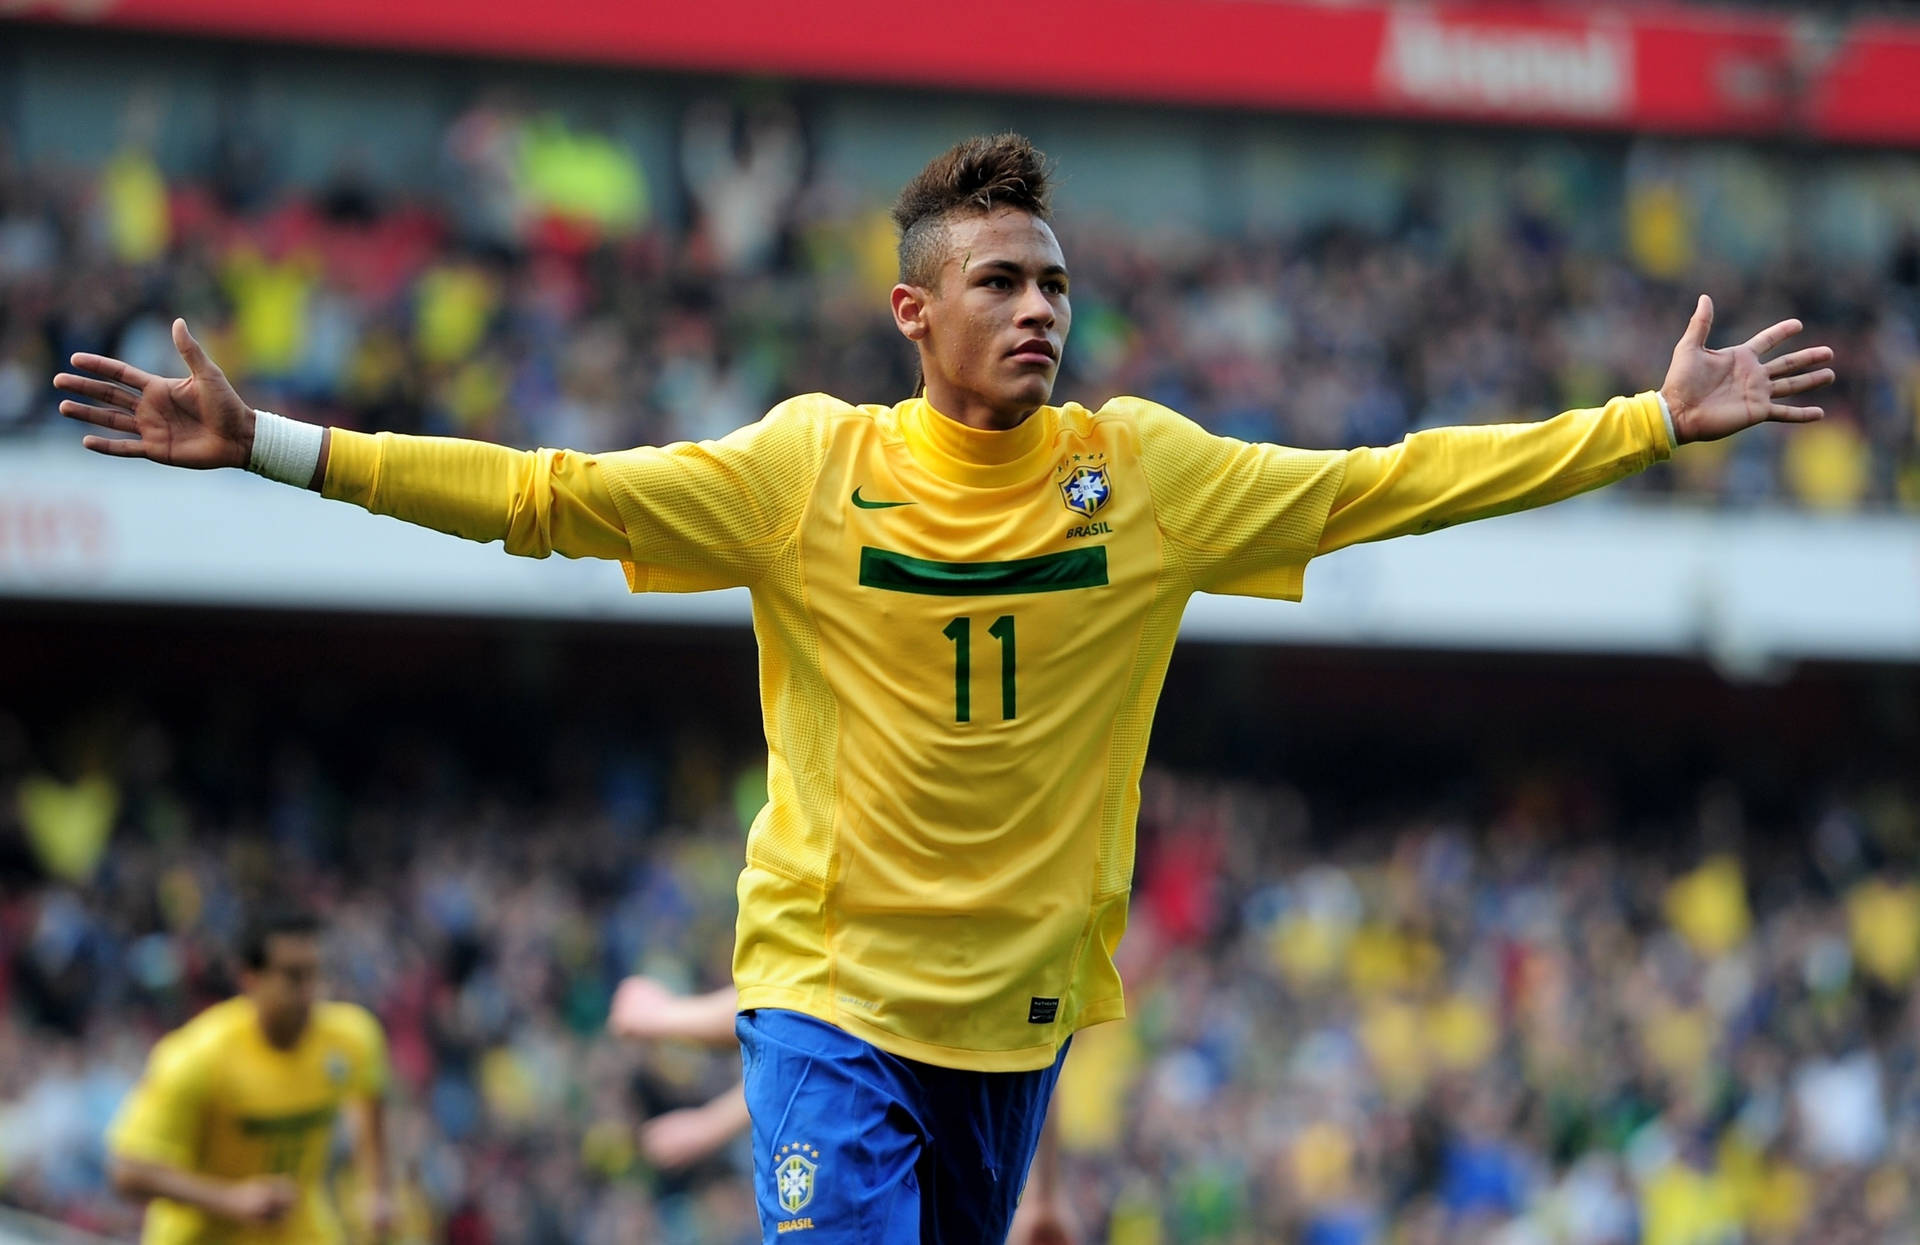 Neymar of Brazil, a rising soccer star Wallpaper